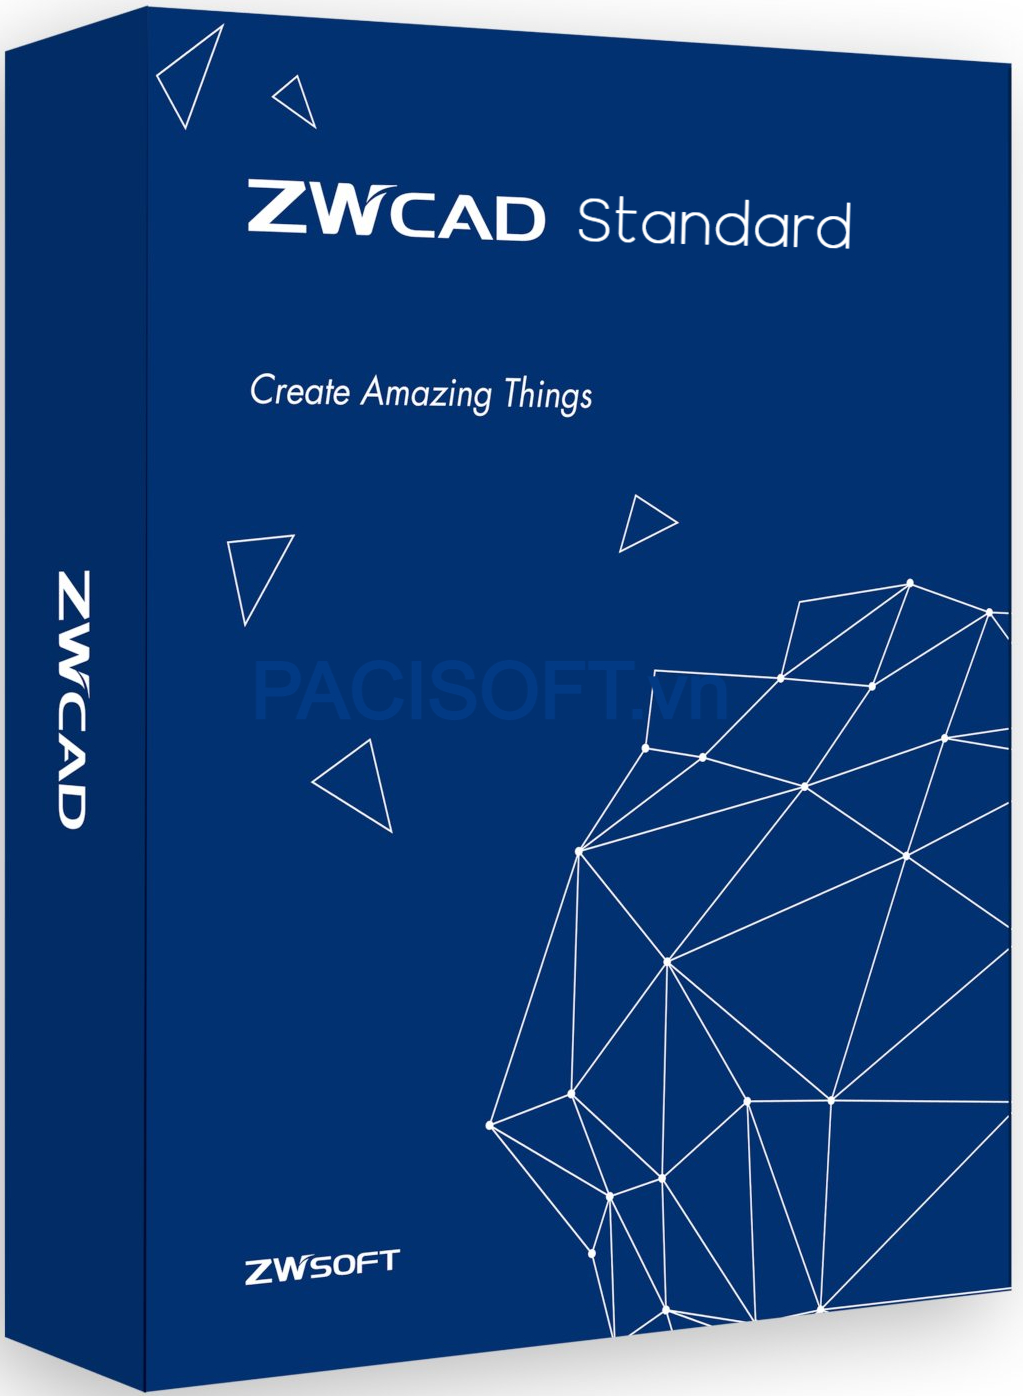 ZWCAD 2022 Standard